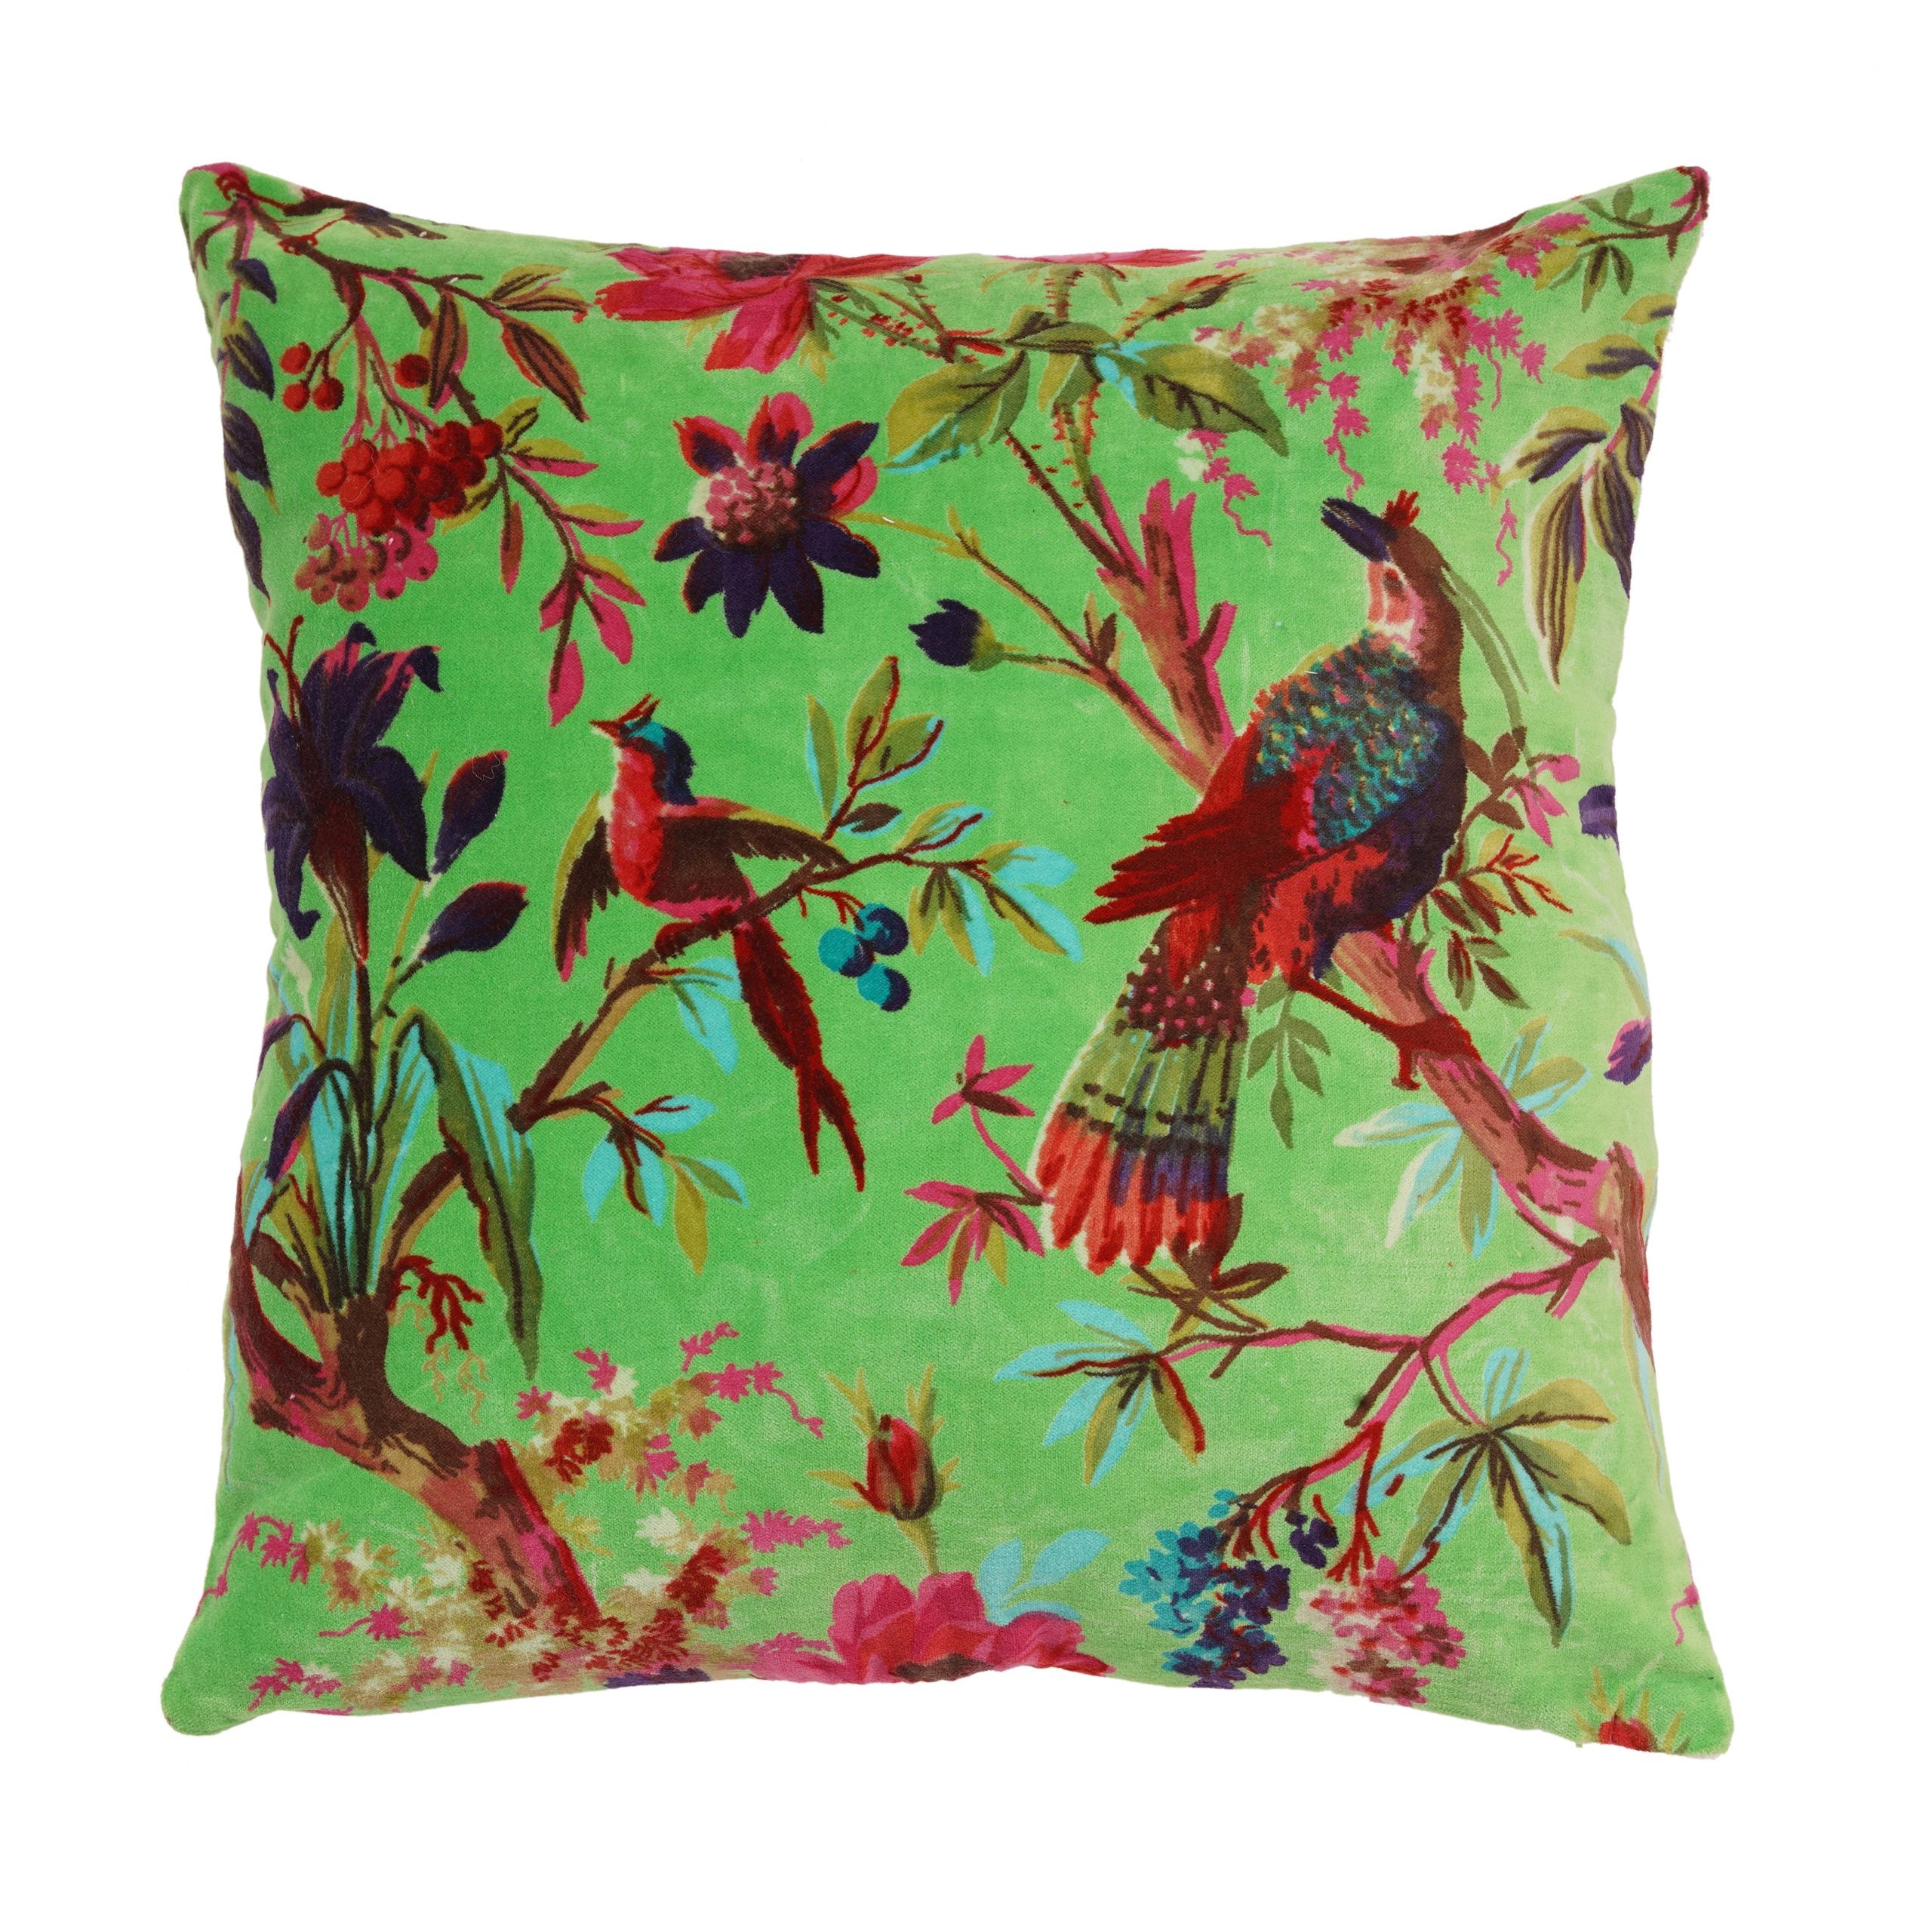 'Feathered Foliage' 100% Cotton Velvet Cushion Cover